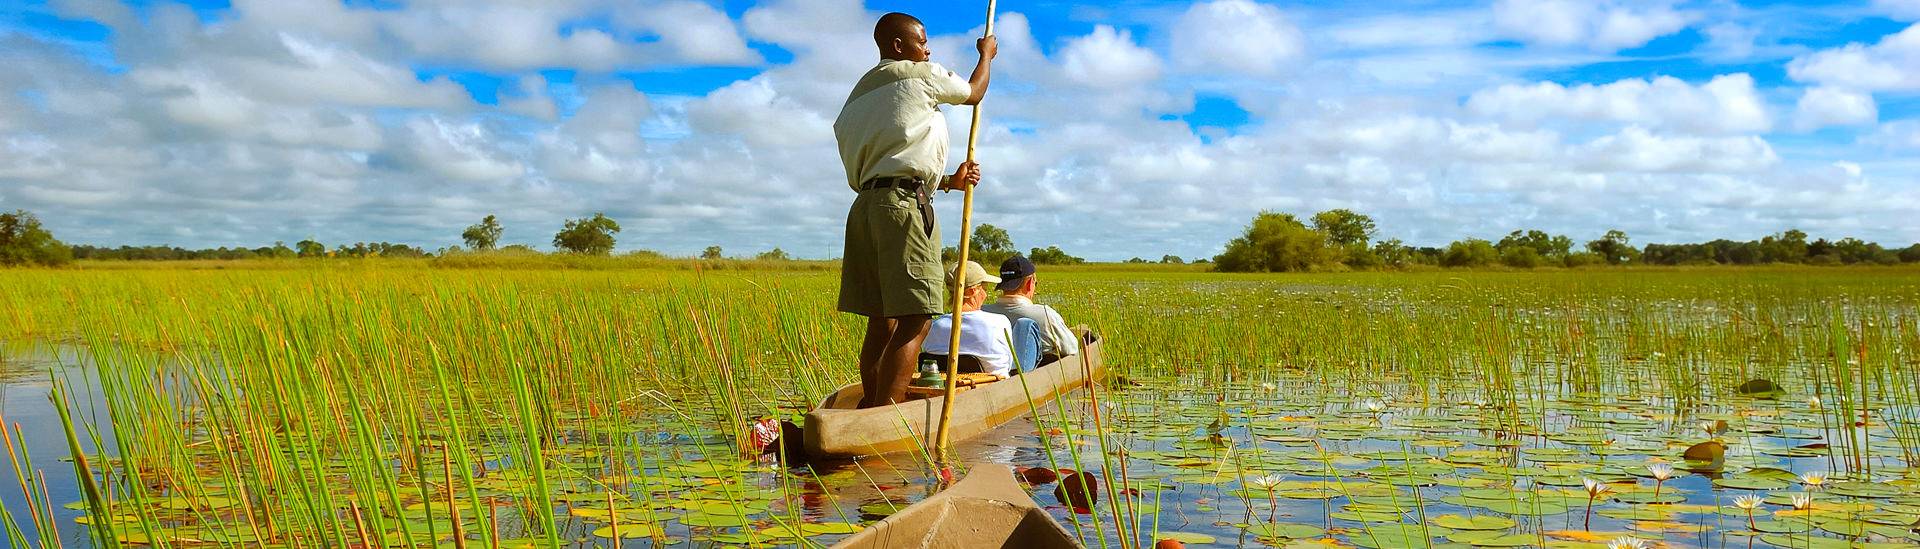 Botswana-Chobe 001 Mokoro-Okavango